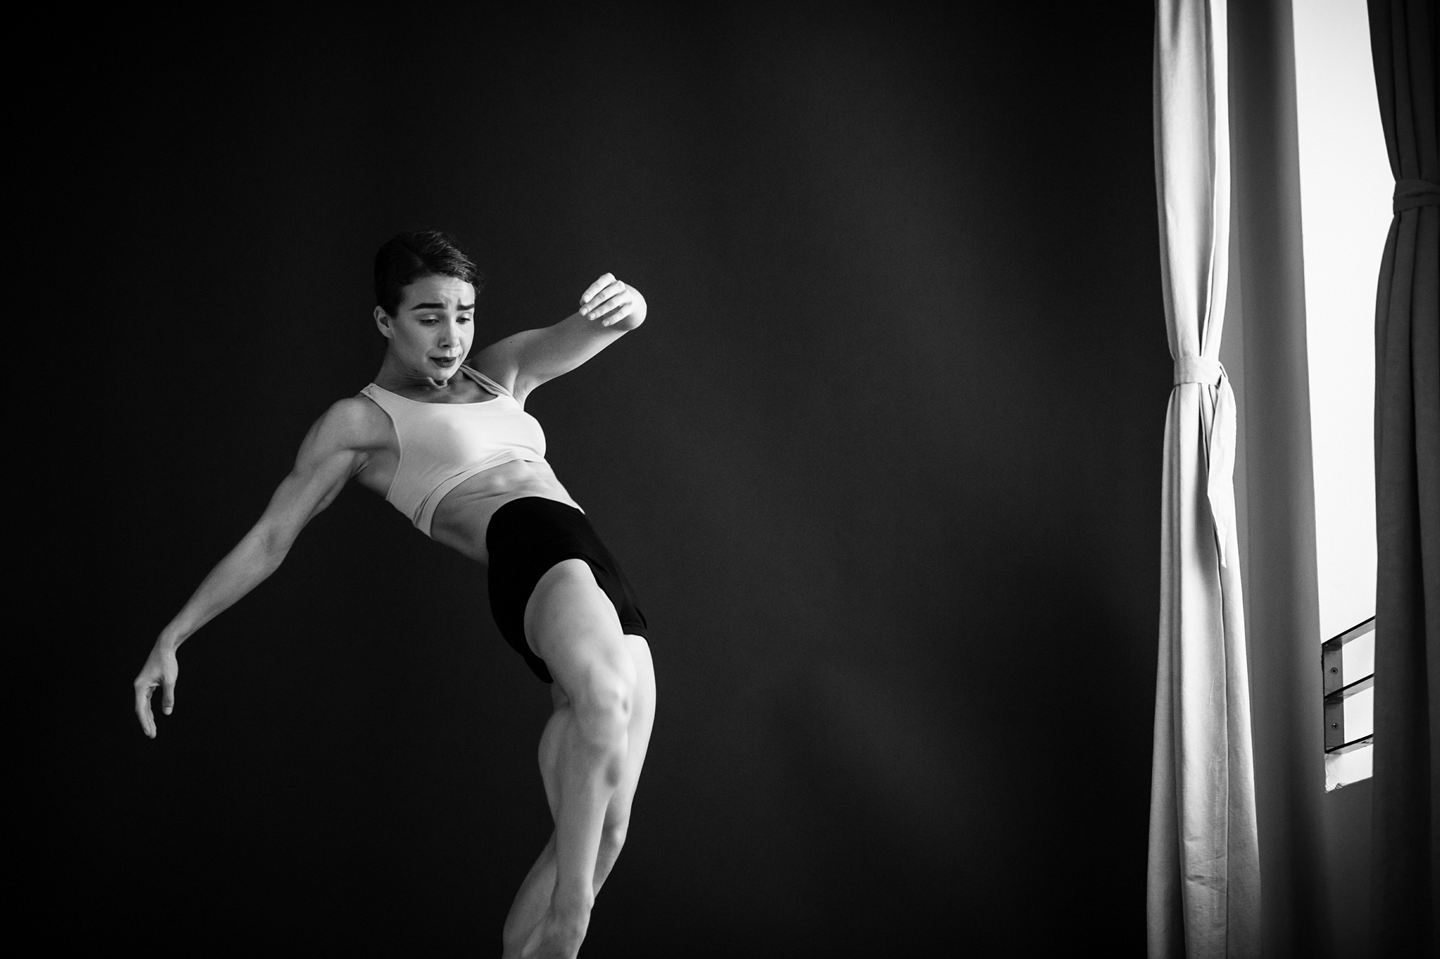 Los Angeles Dance Portrait Photo - Olga Sokolova - by Tommy Xing Photography 06.JPG